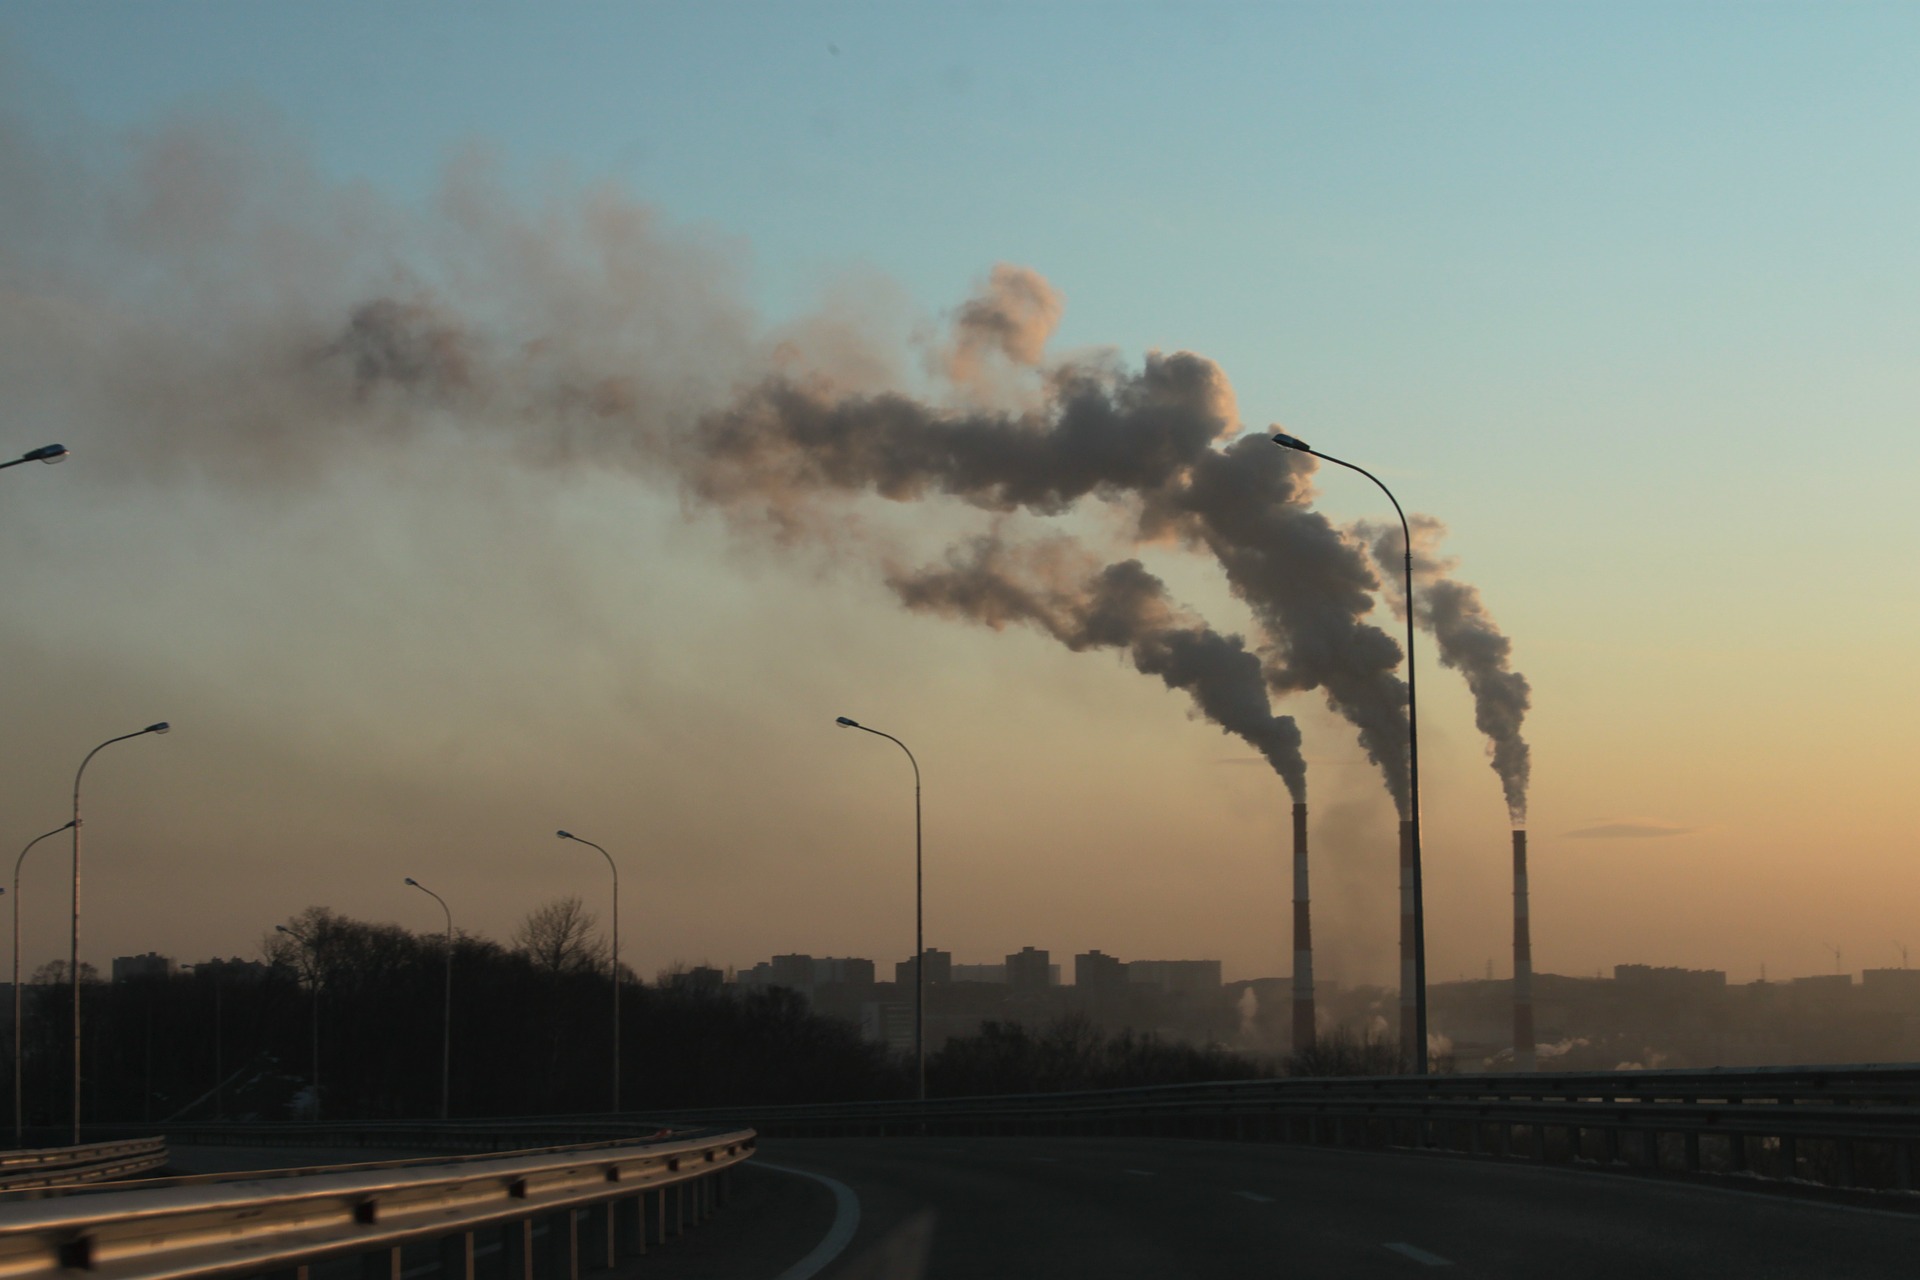 View from a motorway at smoking factory chimneys.